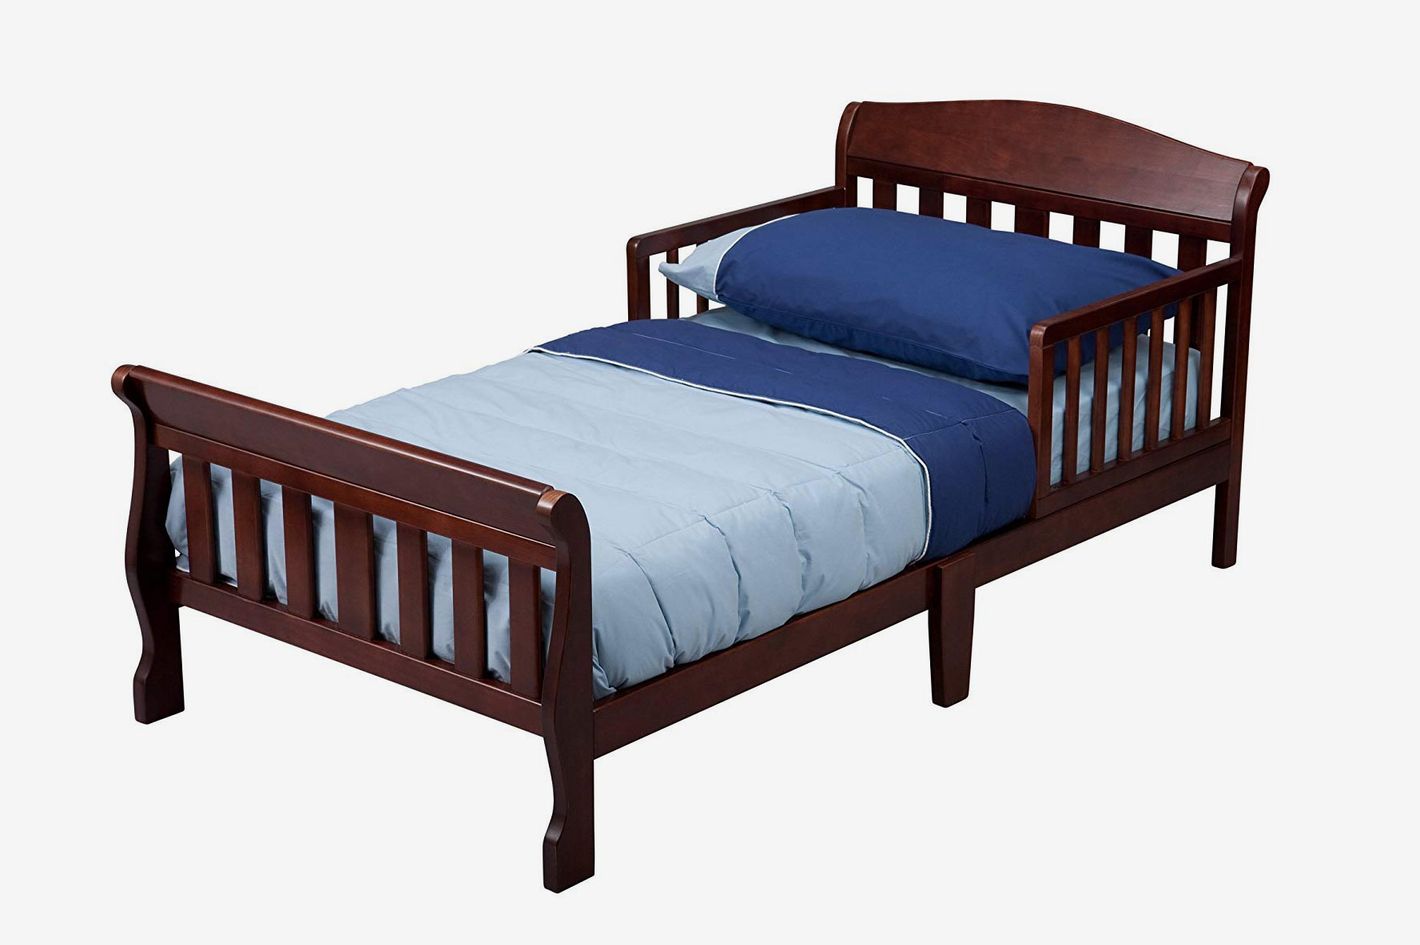 10 Best Toddler Beds 2019 The, Used Toddler Bed Frame